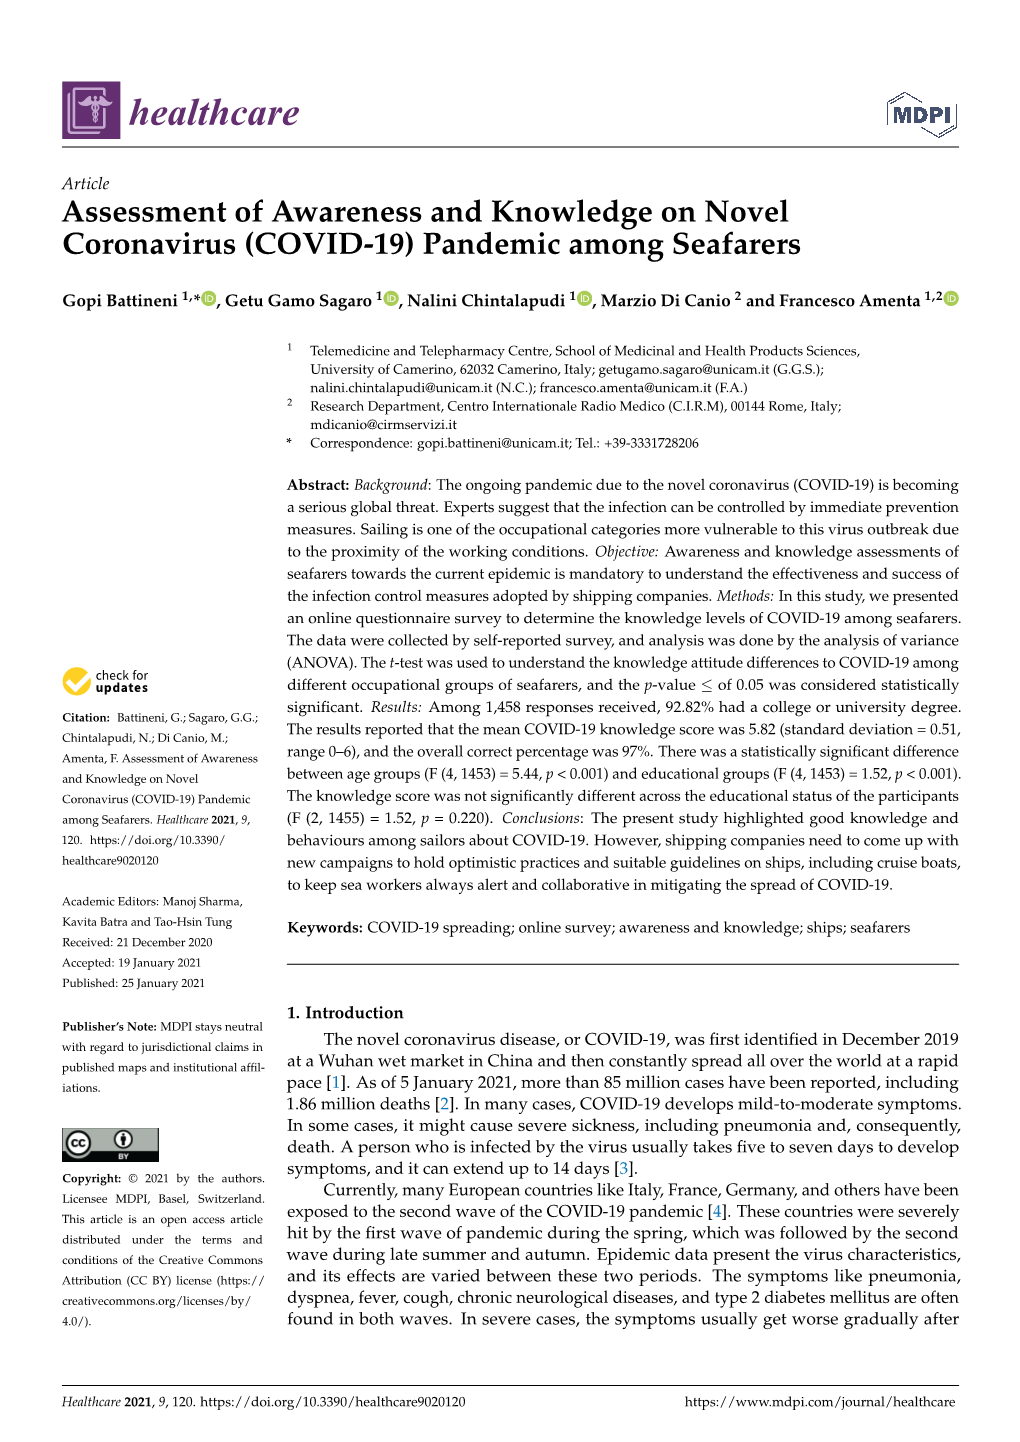 Assessment of Awareness and Knowledge on Novel Coronavirus (COVID-19) Pandemic Among Seafarers